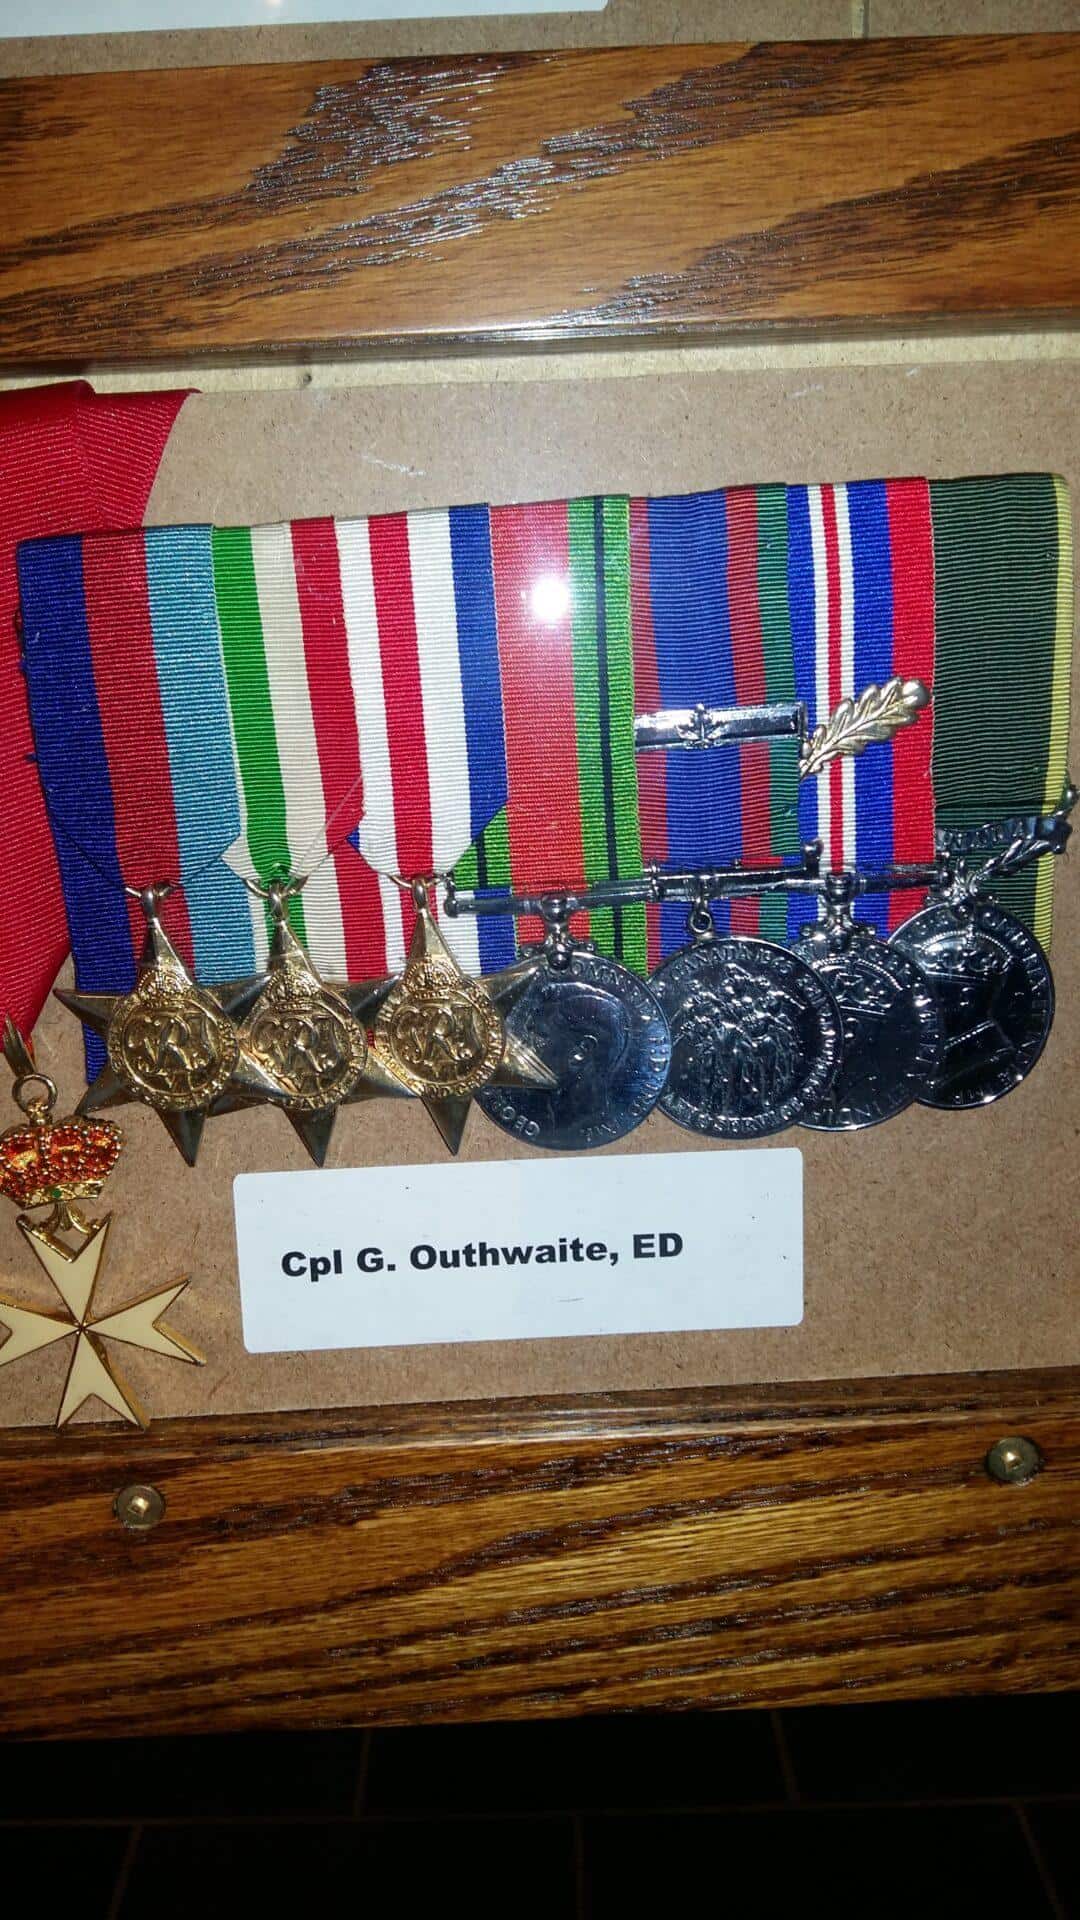 Capt. G. Outhwaite medals